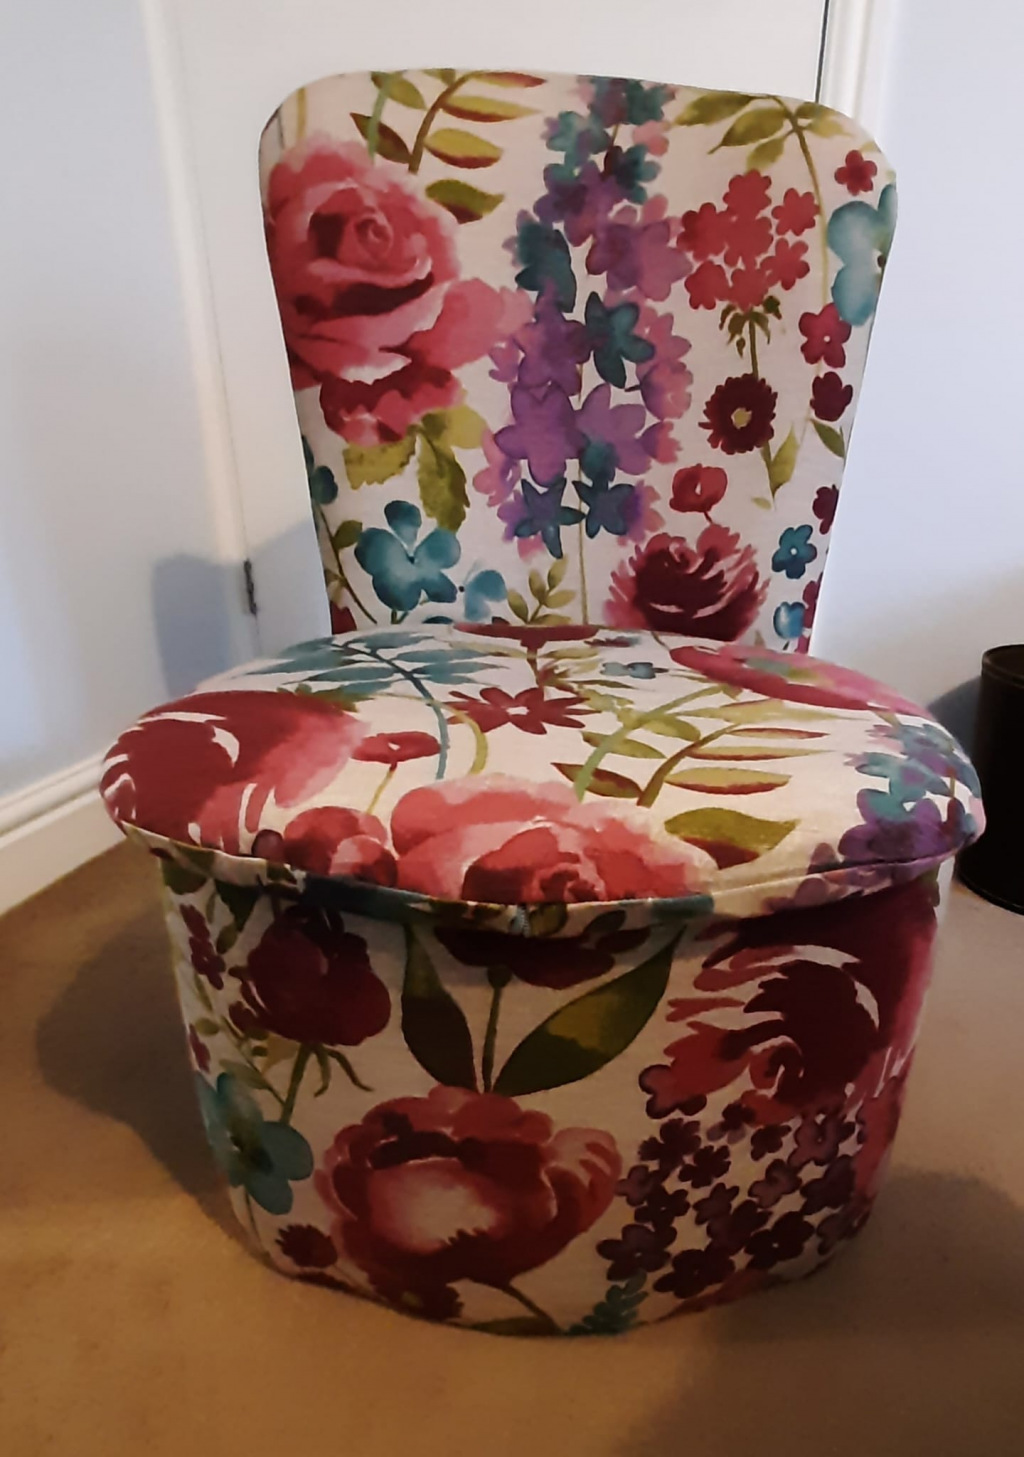 A refurbished chair